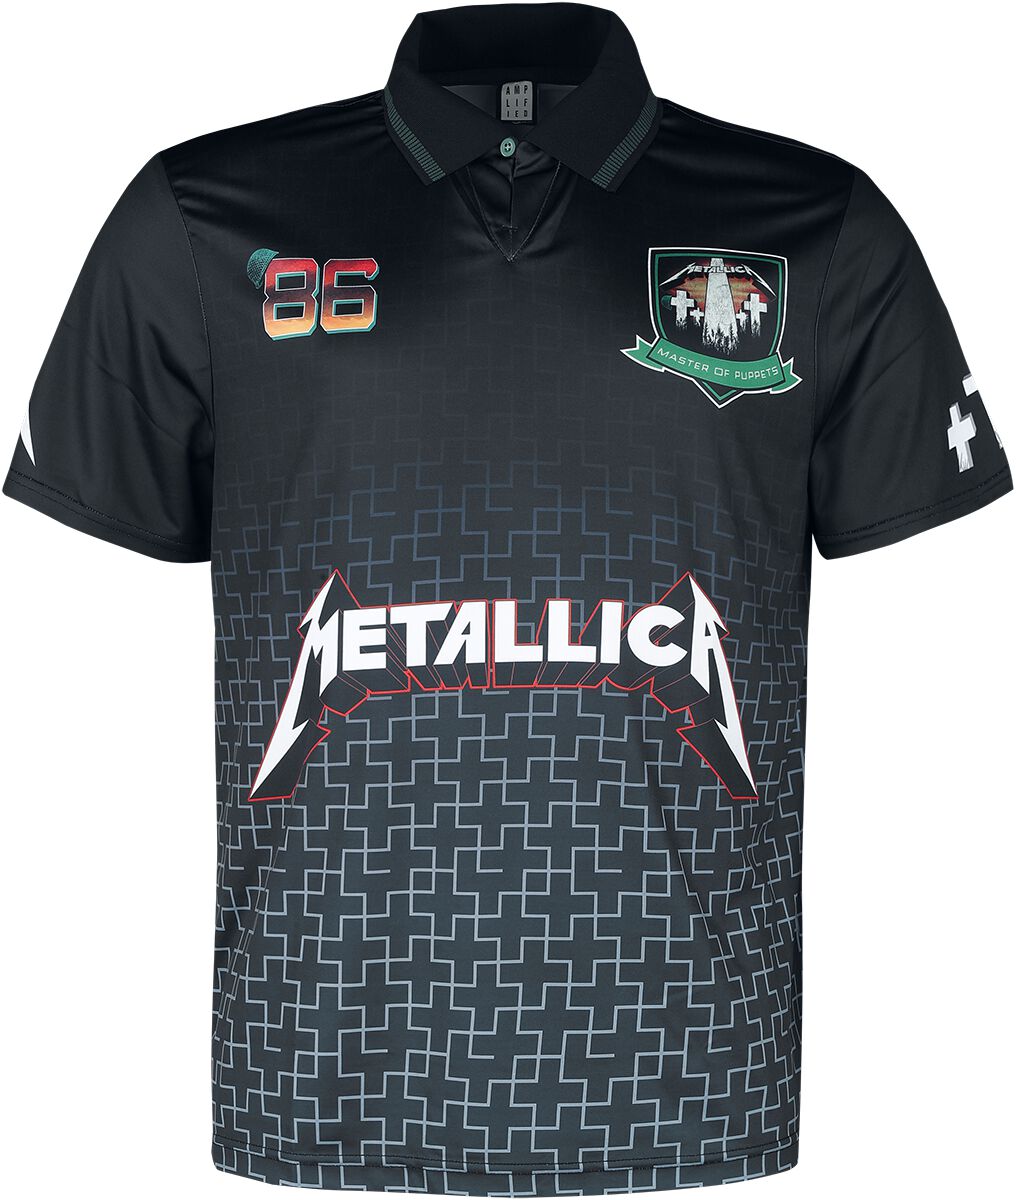 Metallica's football shirt by COPA football